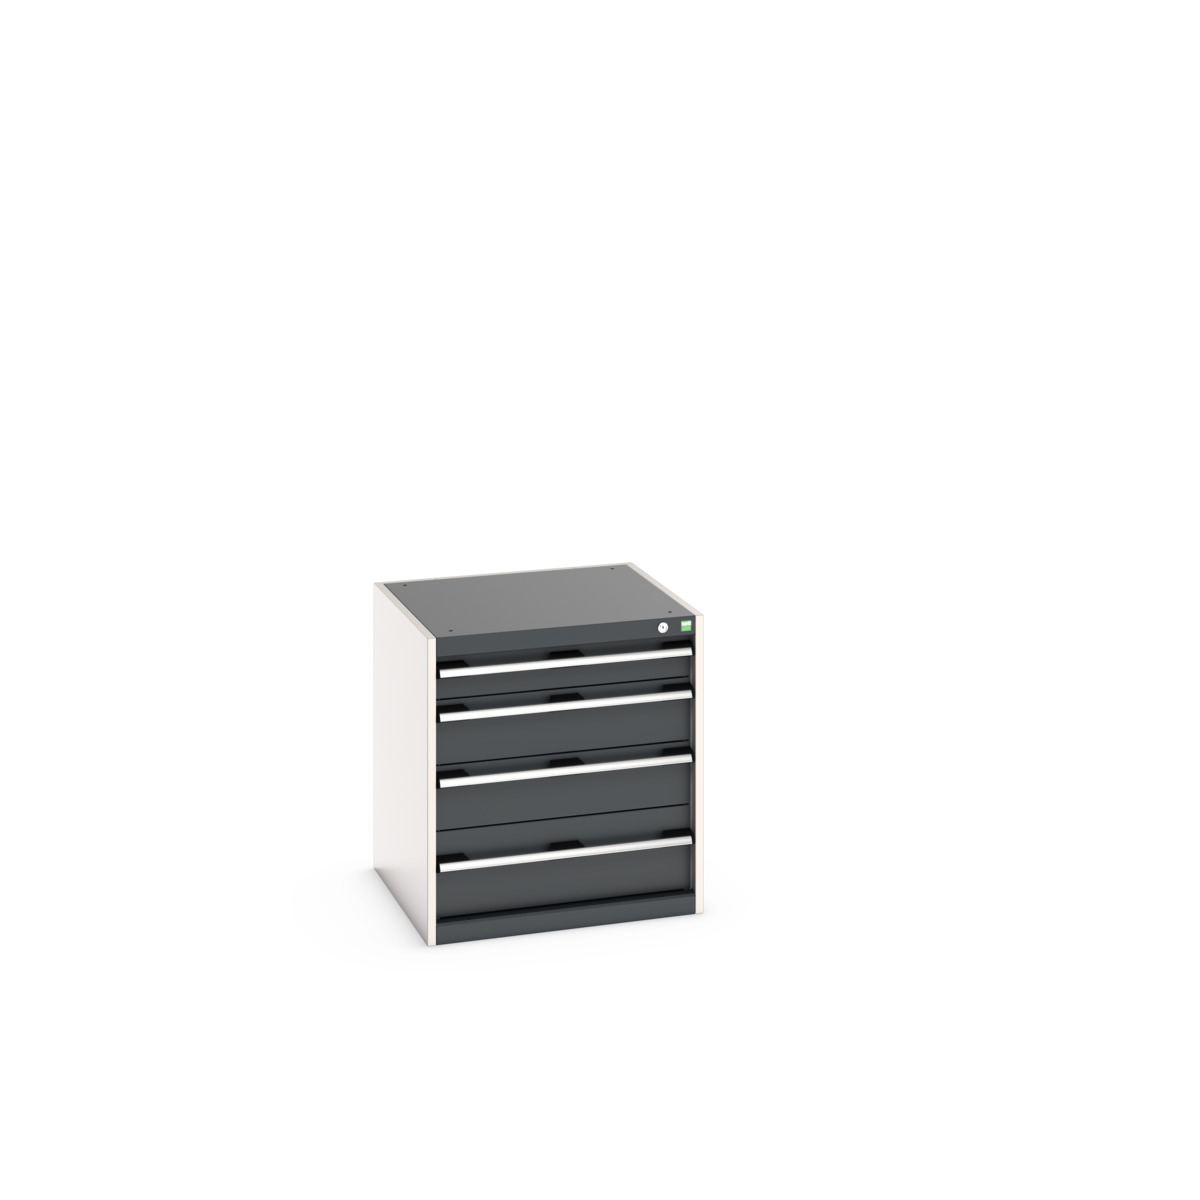 40019025. - cubio drawer cabinet